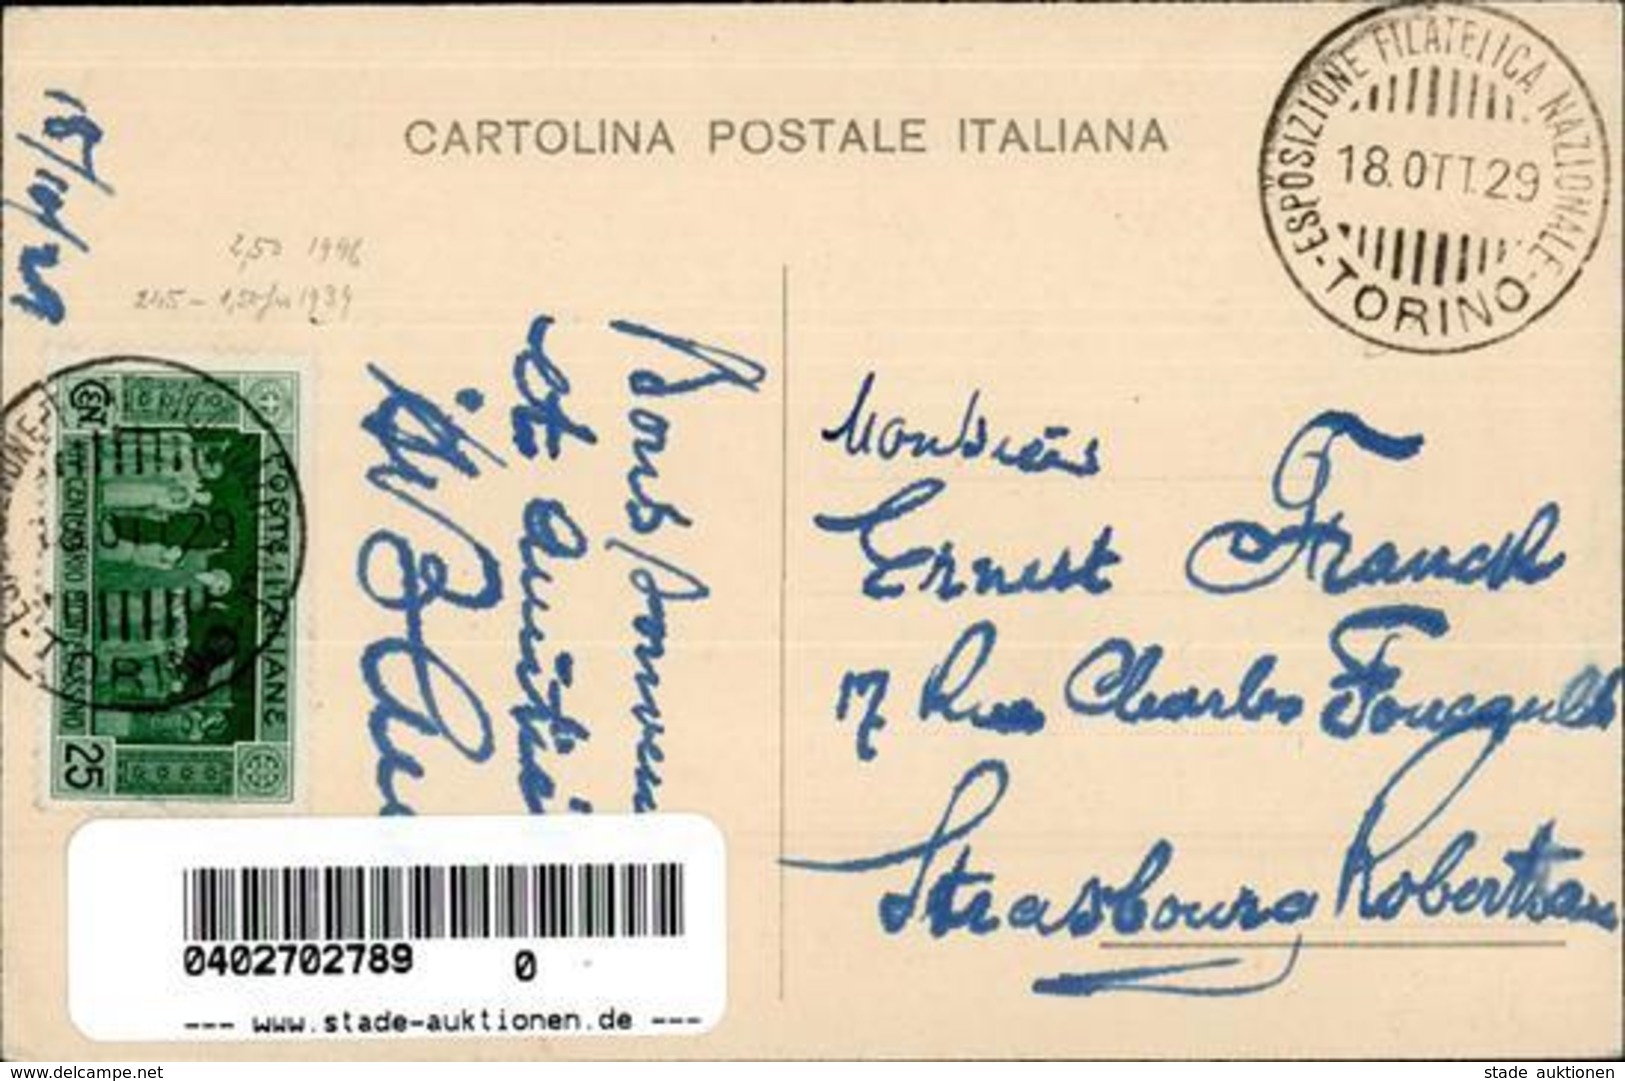 Philatelistentag Torino (10100) Italien XVI. Congresso Filatelico Italiano I-II - Post & Briefboten